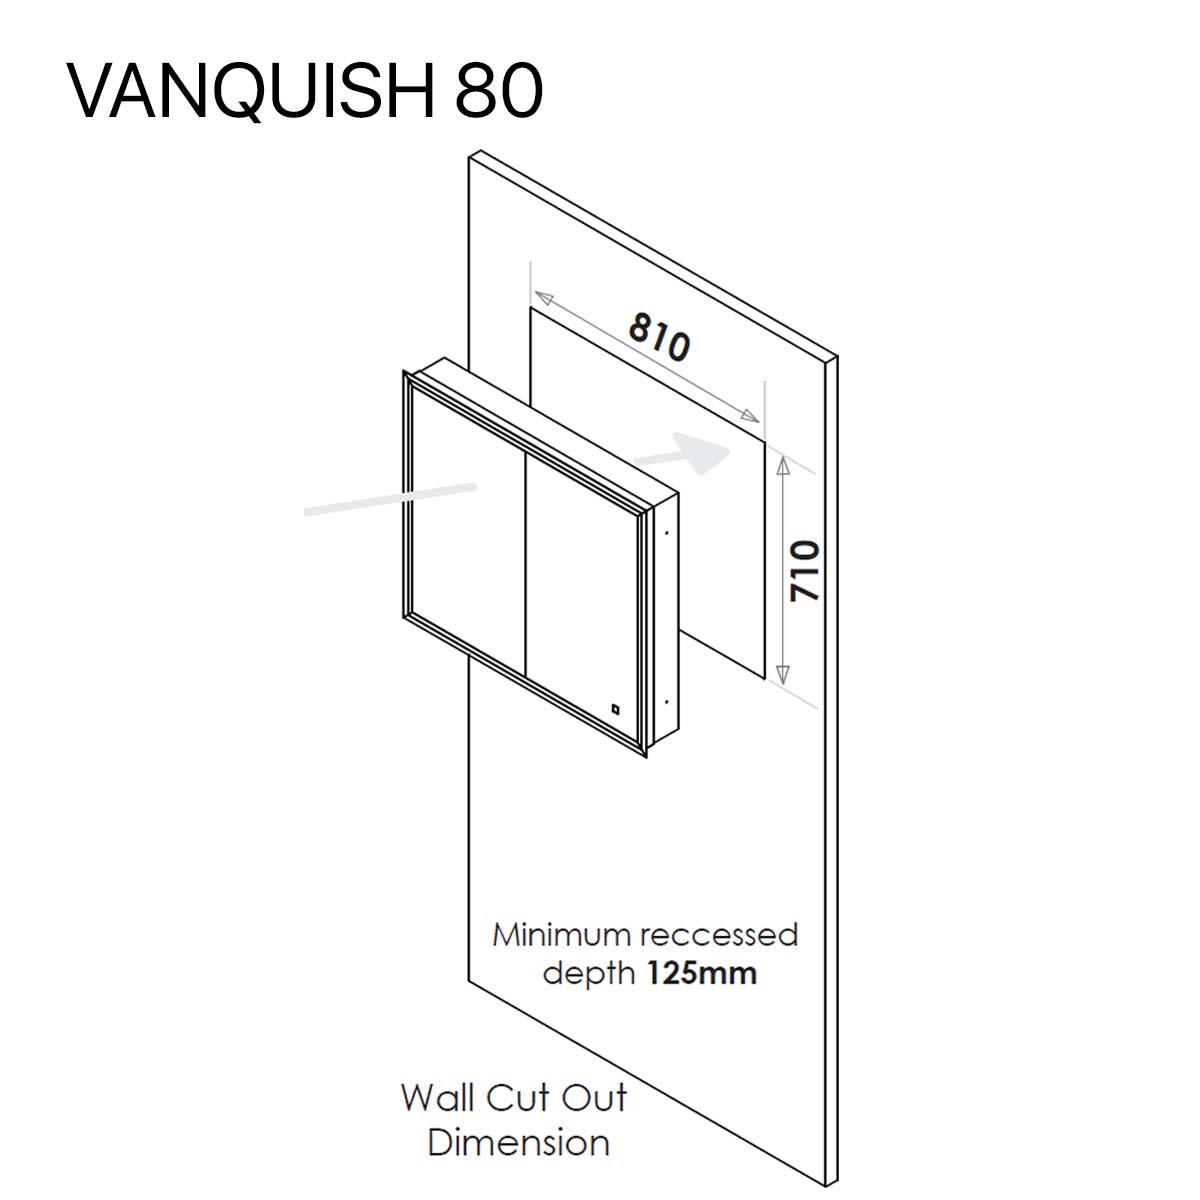 HiB Vanquish 80 Double Door Recessed LED Mirror Cabinet Dimensions